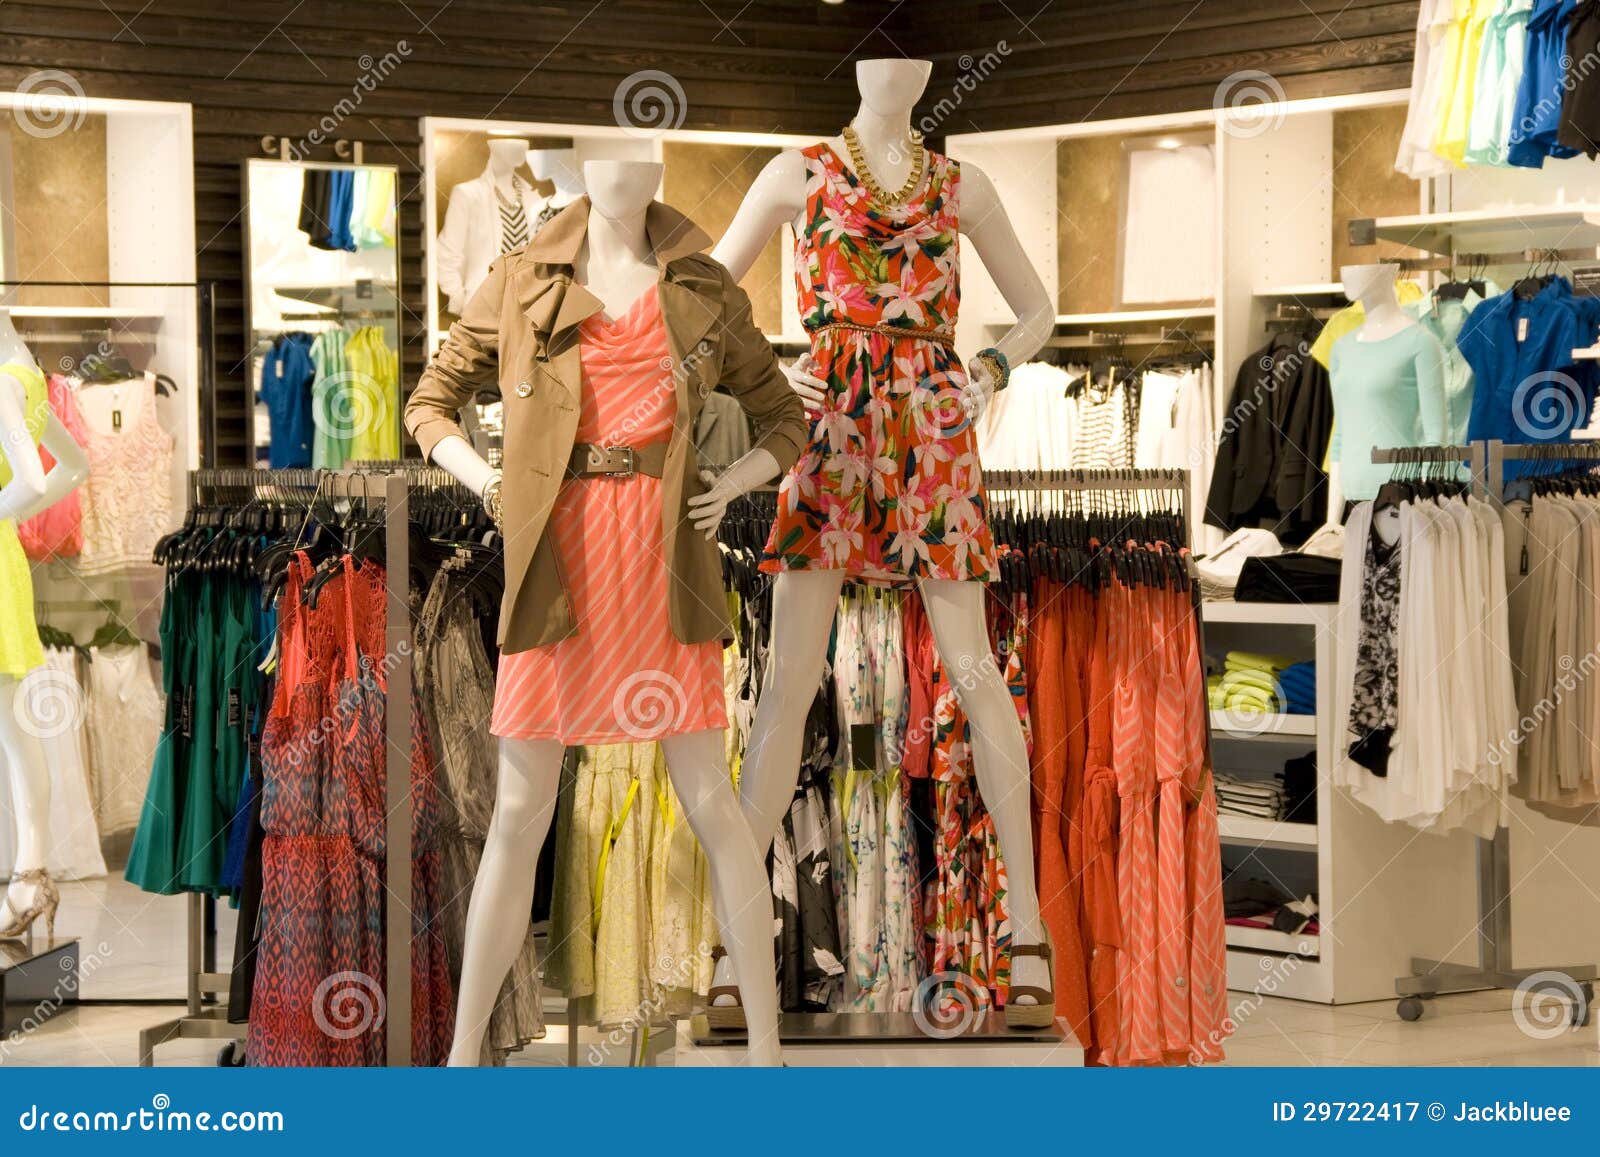 Woman Fashion Clothing Store Stock Image - Image of shop, design: 29722417